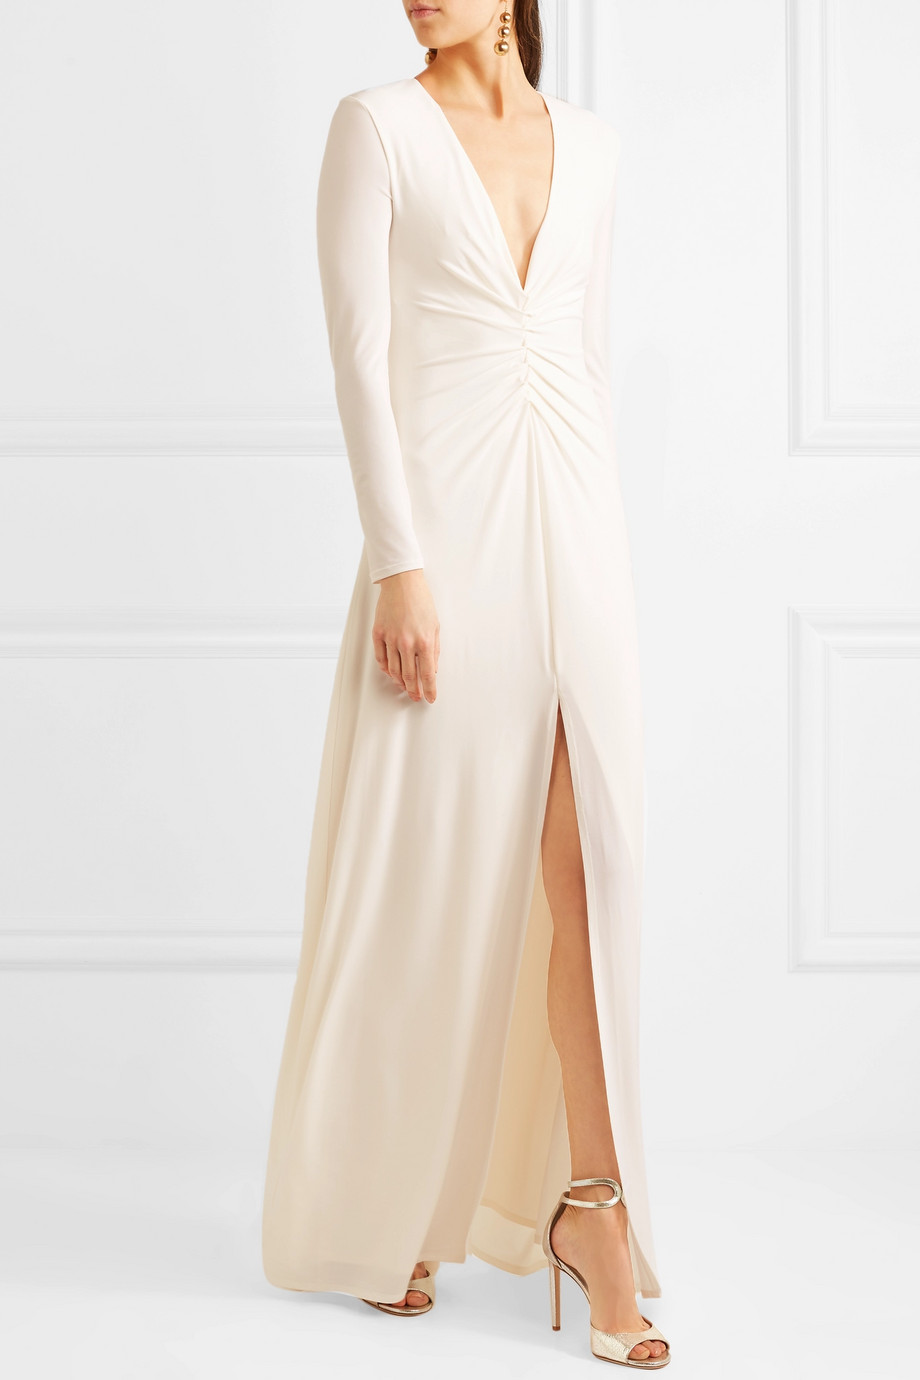 Evangeline Dress in Bride at BHLDN | Wedding dresses under 500, Bride  reception dresses, Modcloth wedding dress